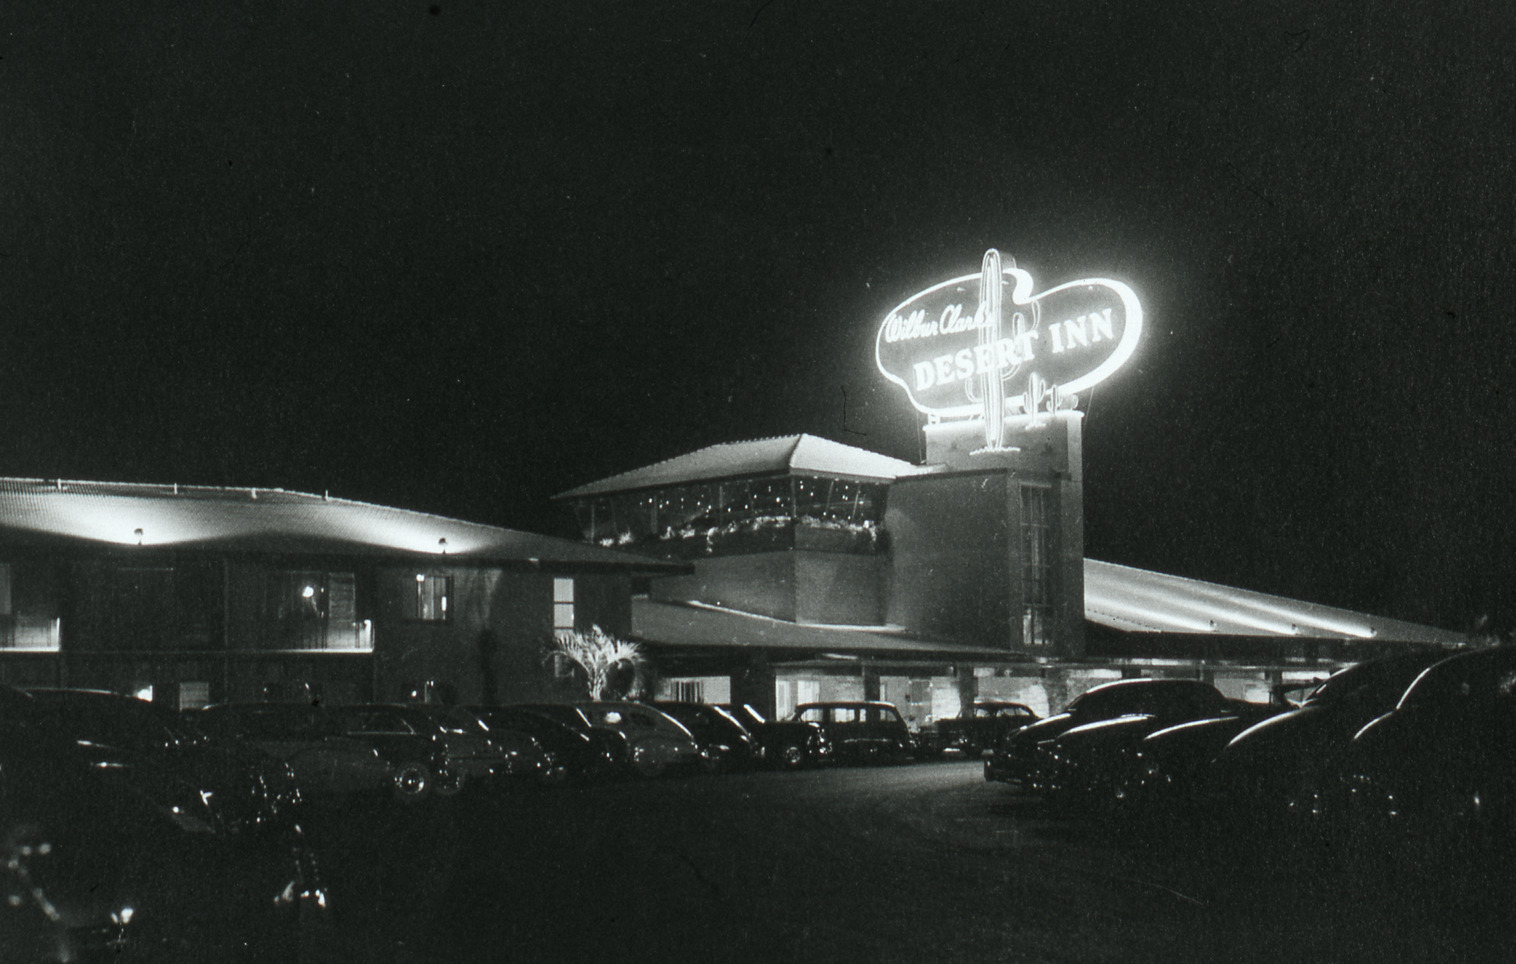 Wilbur Clark's Desert Inn roof mounted sign, Las Vegas, Nevada: photographic print